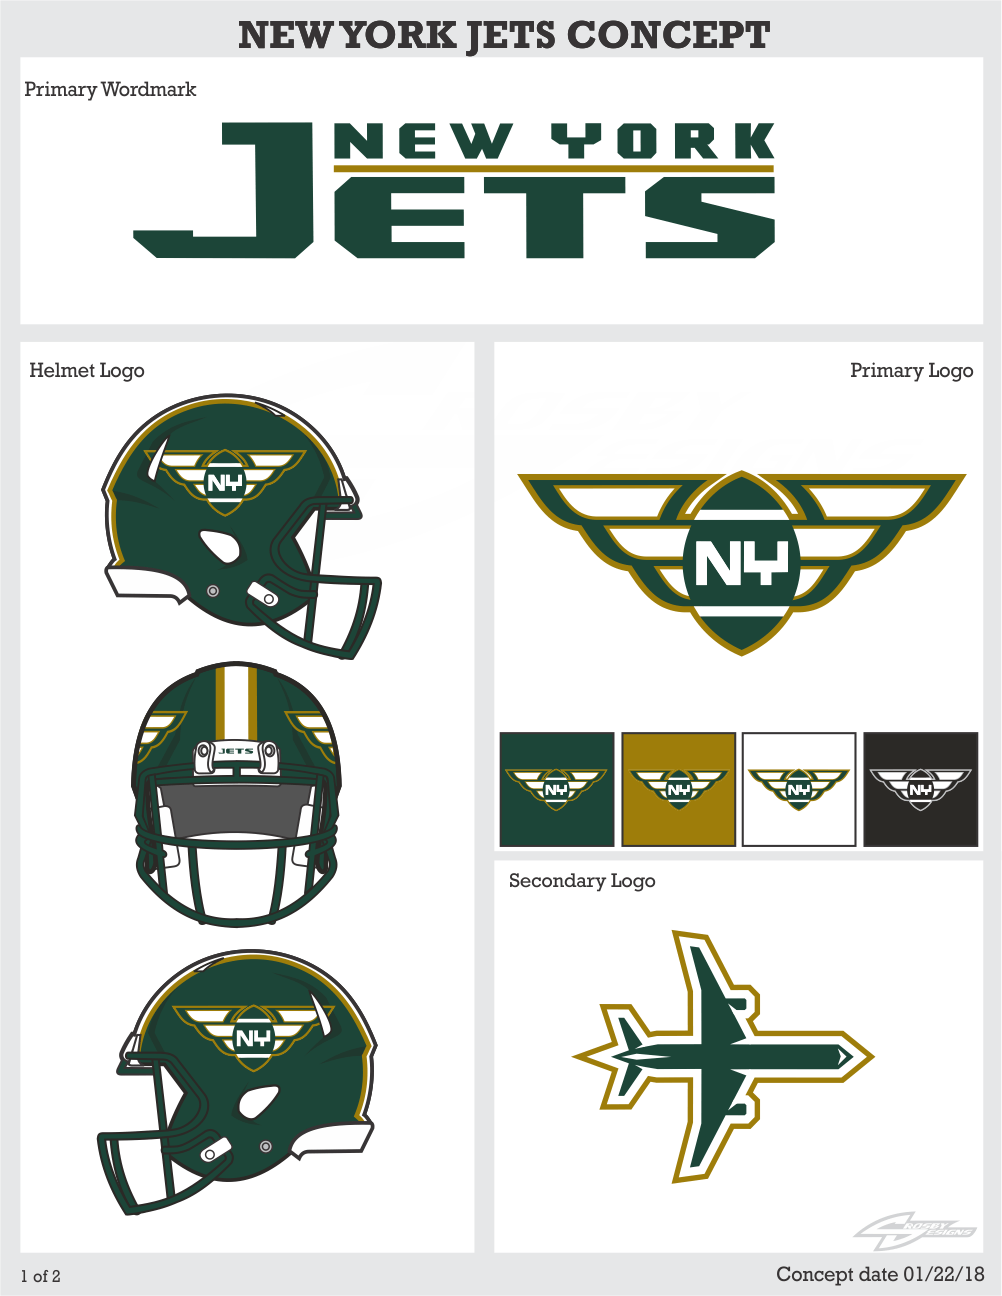 New York Jets New Logo - New York Jets concept (final version added)